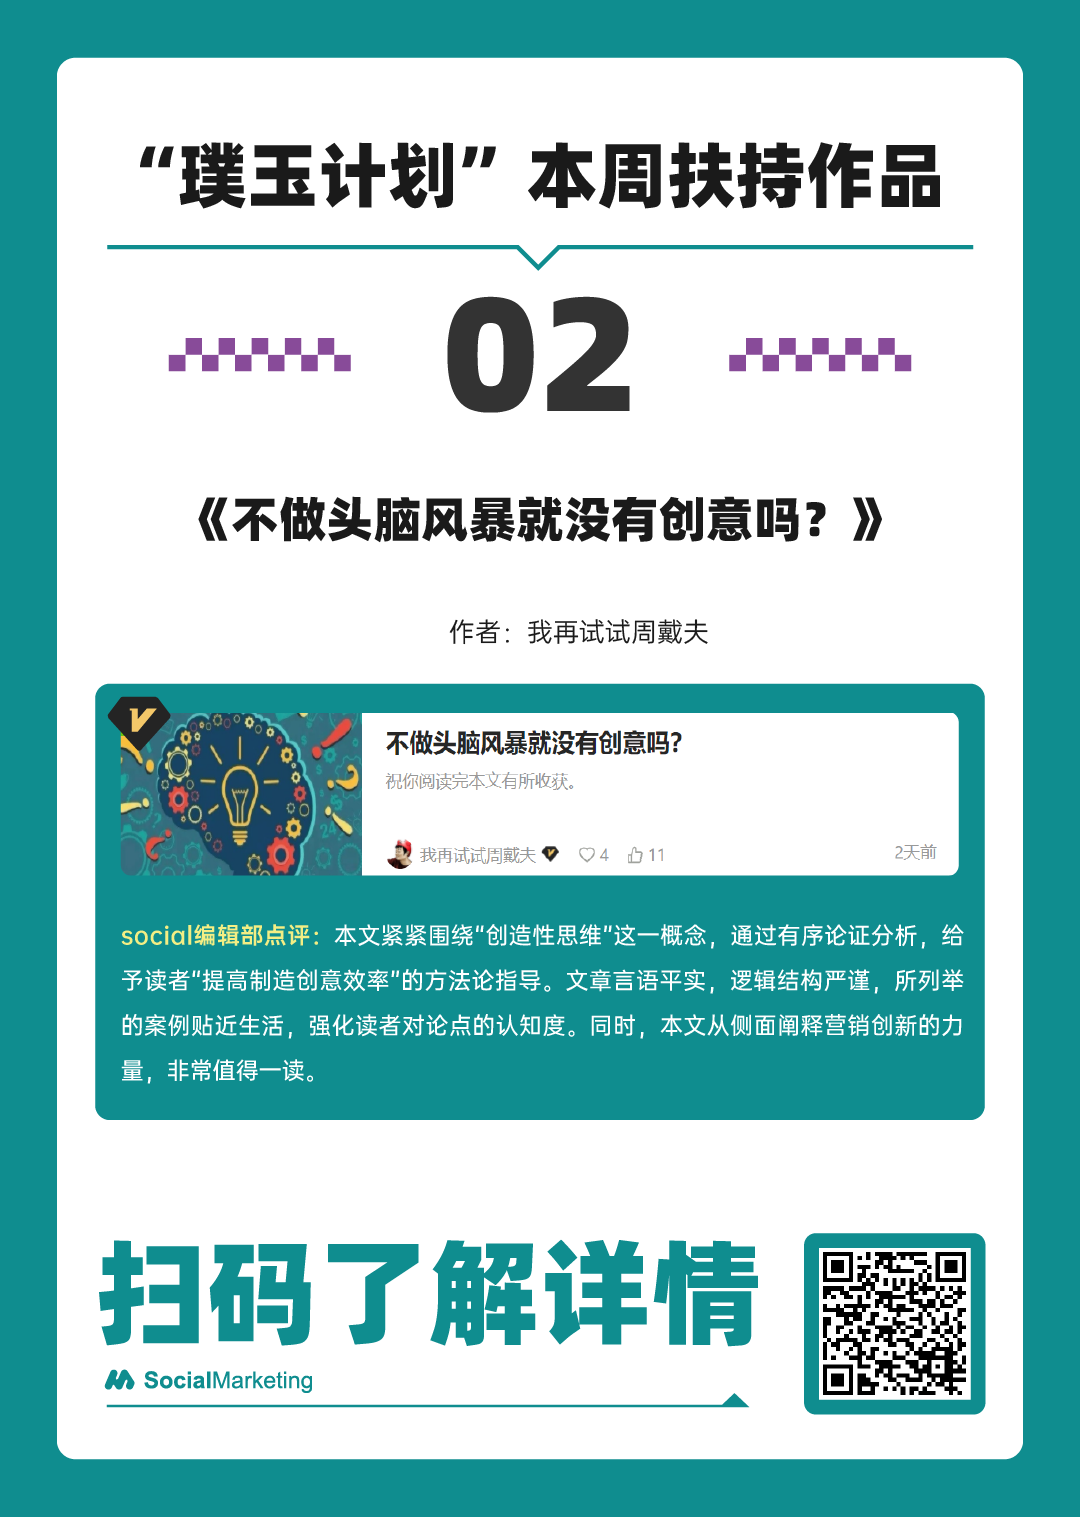 SocialMarketing 「 璞玉计划 」一周扶持作品名单 第9期